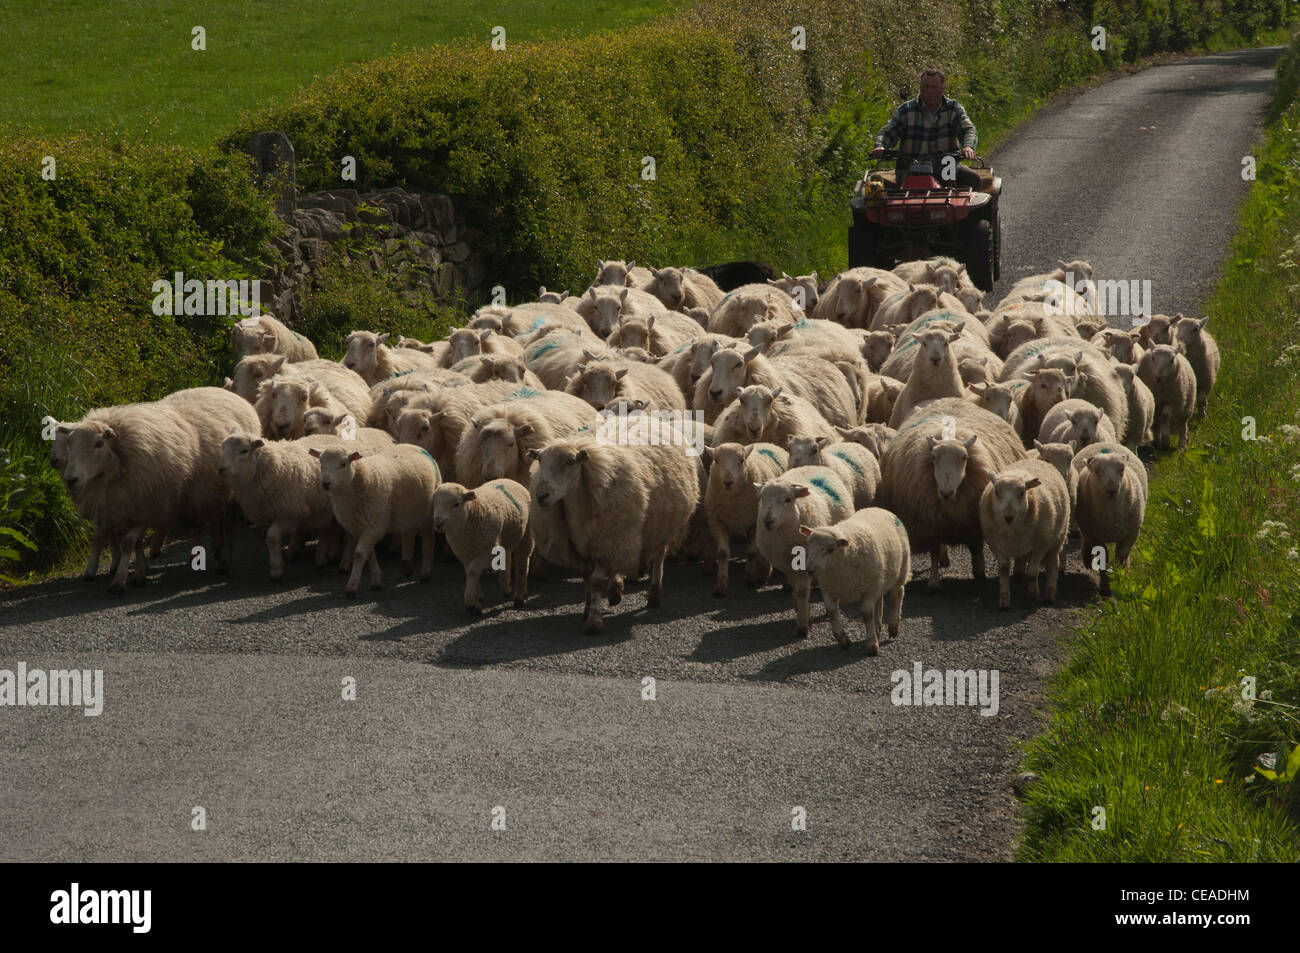 Farmer on quadbike herding sheep down country road Stock Photo